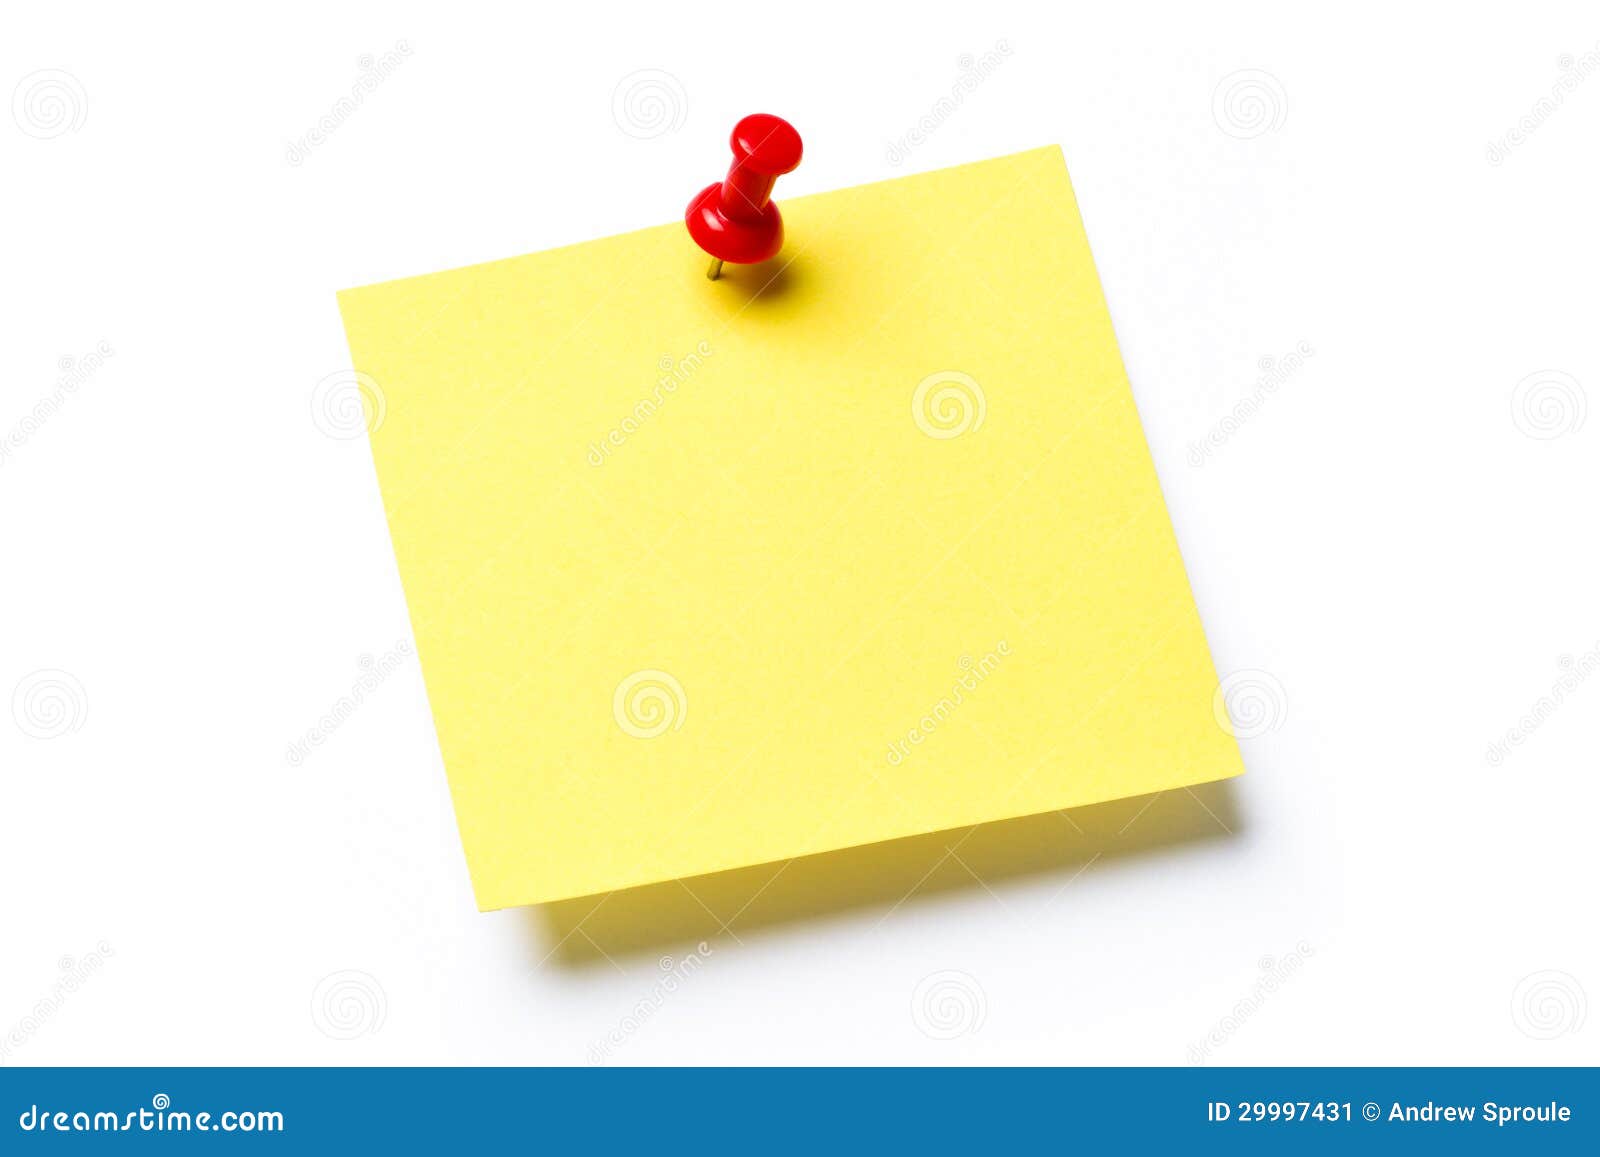 yellow sticky note